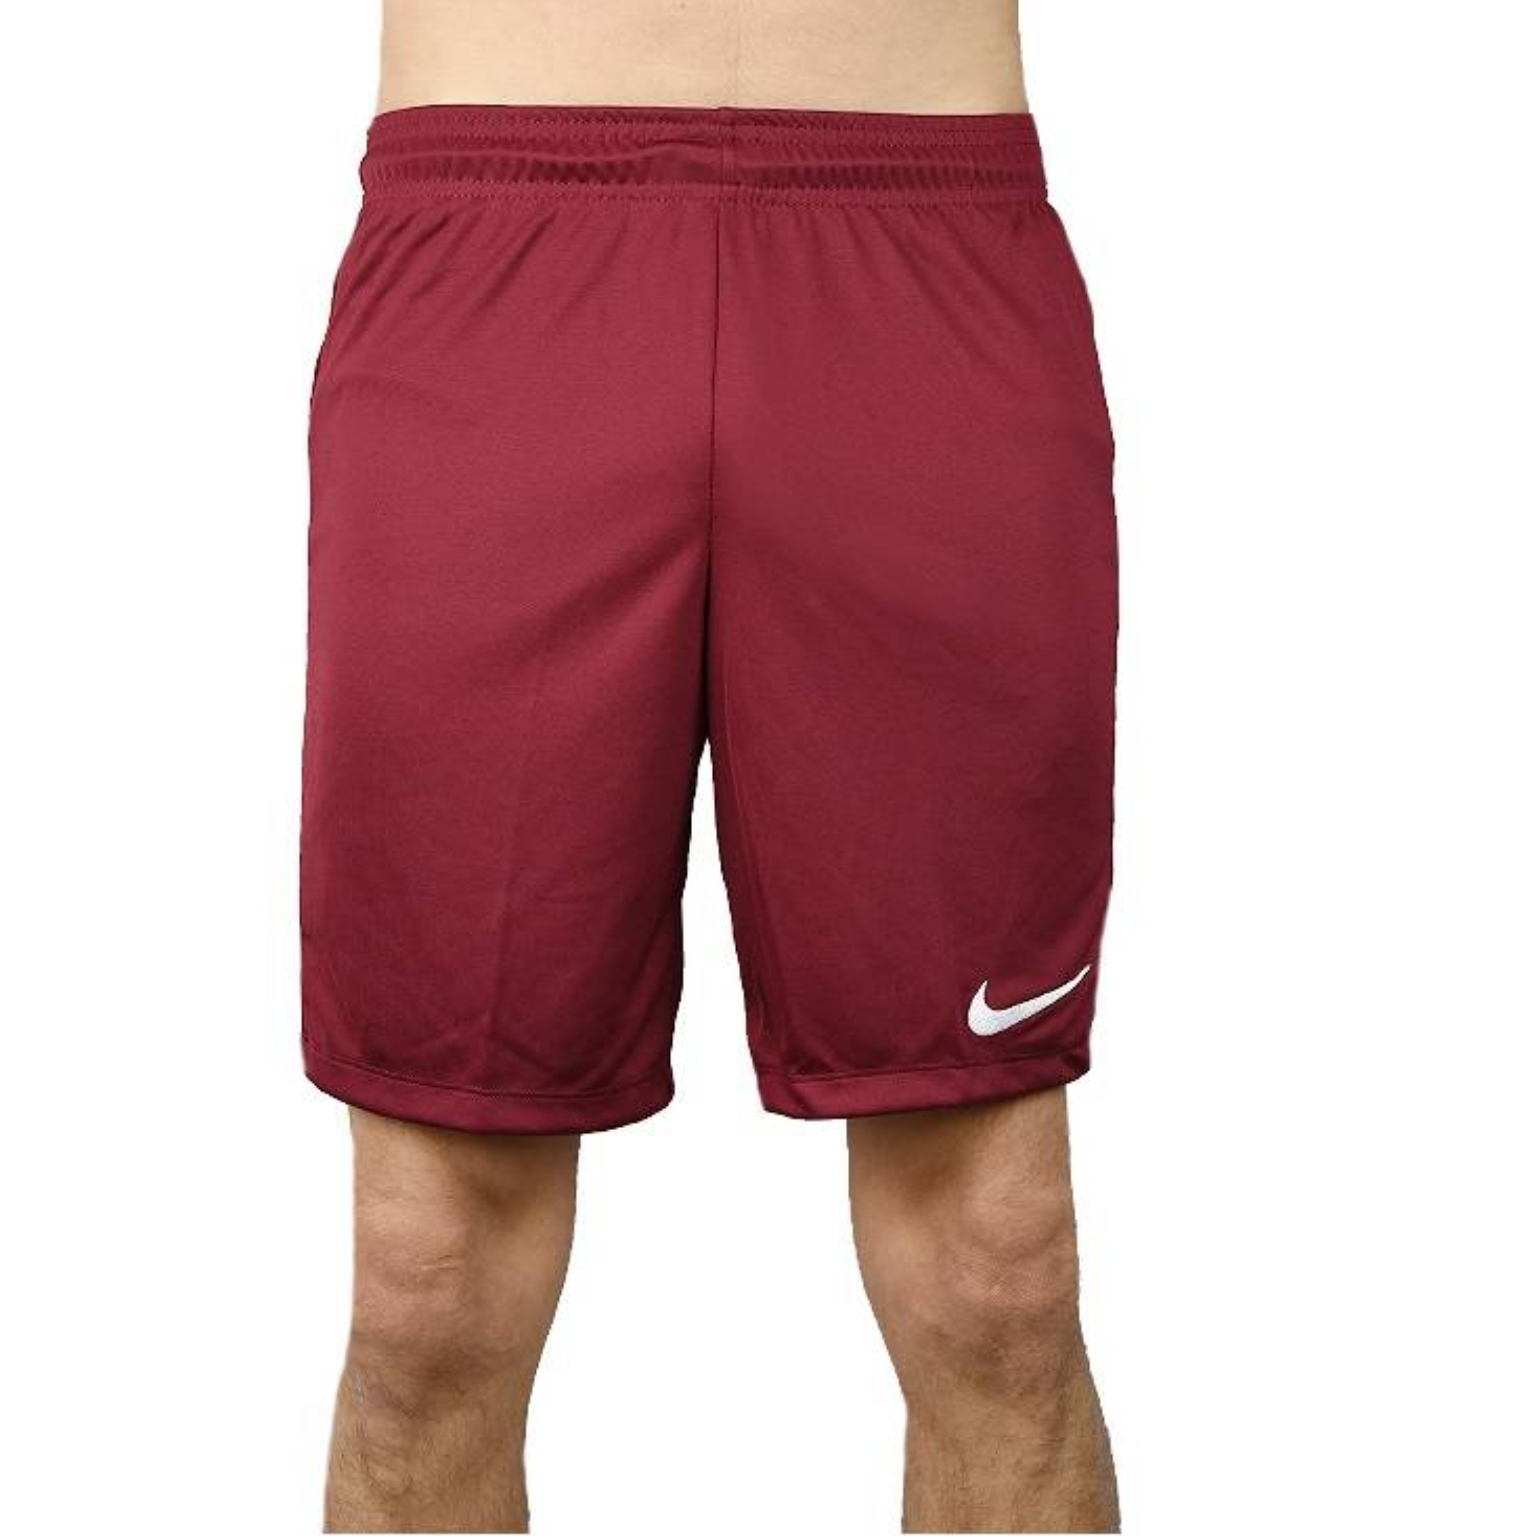 Шорты футбольные Nike размер L, бордовые, BV6855-677